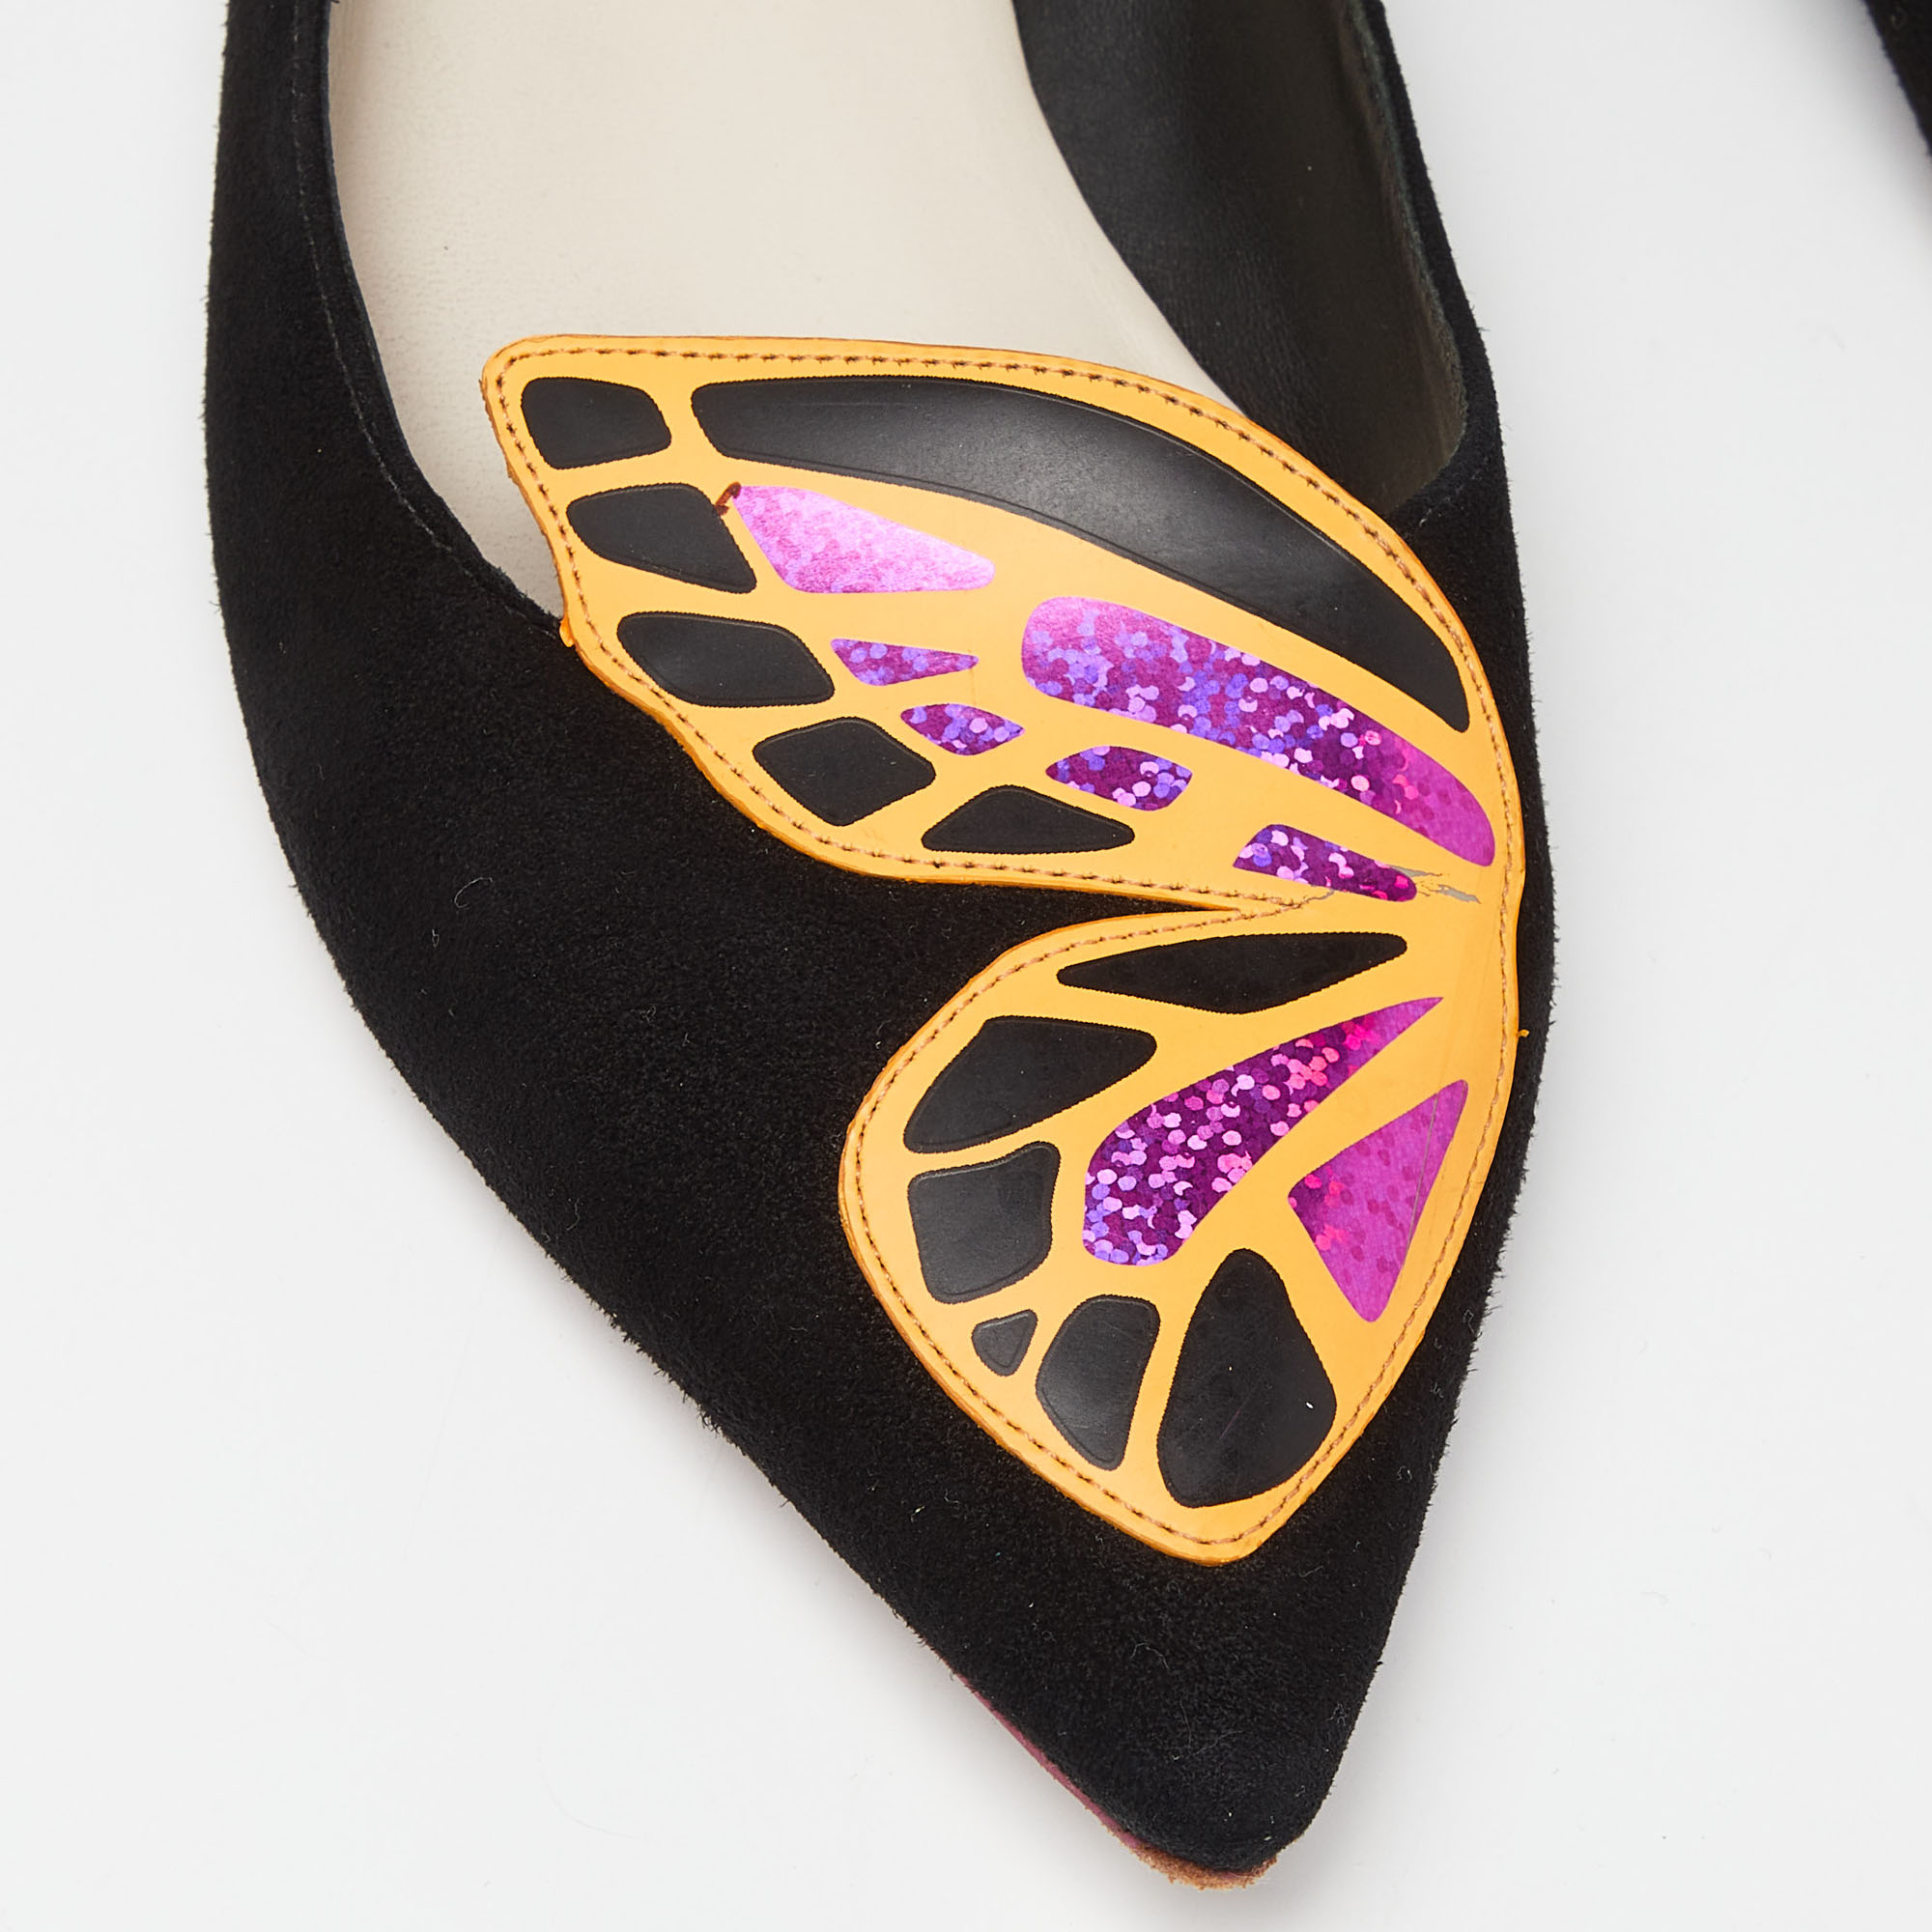 Sophia Webster Black Suede Bibi Butterfly Pointed Toe Ballet Flats Size 40